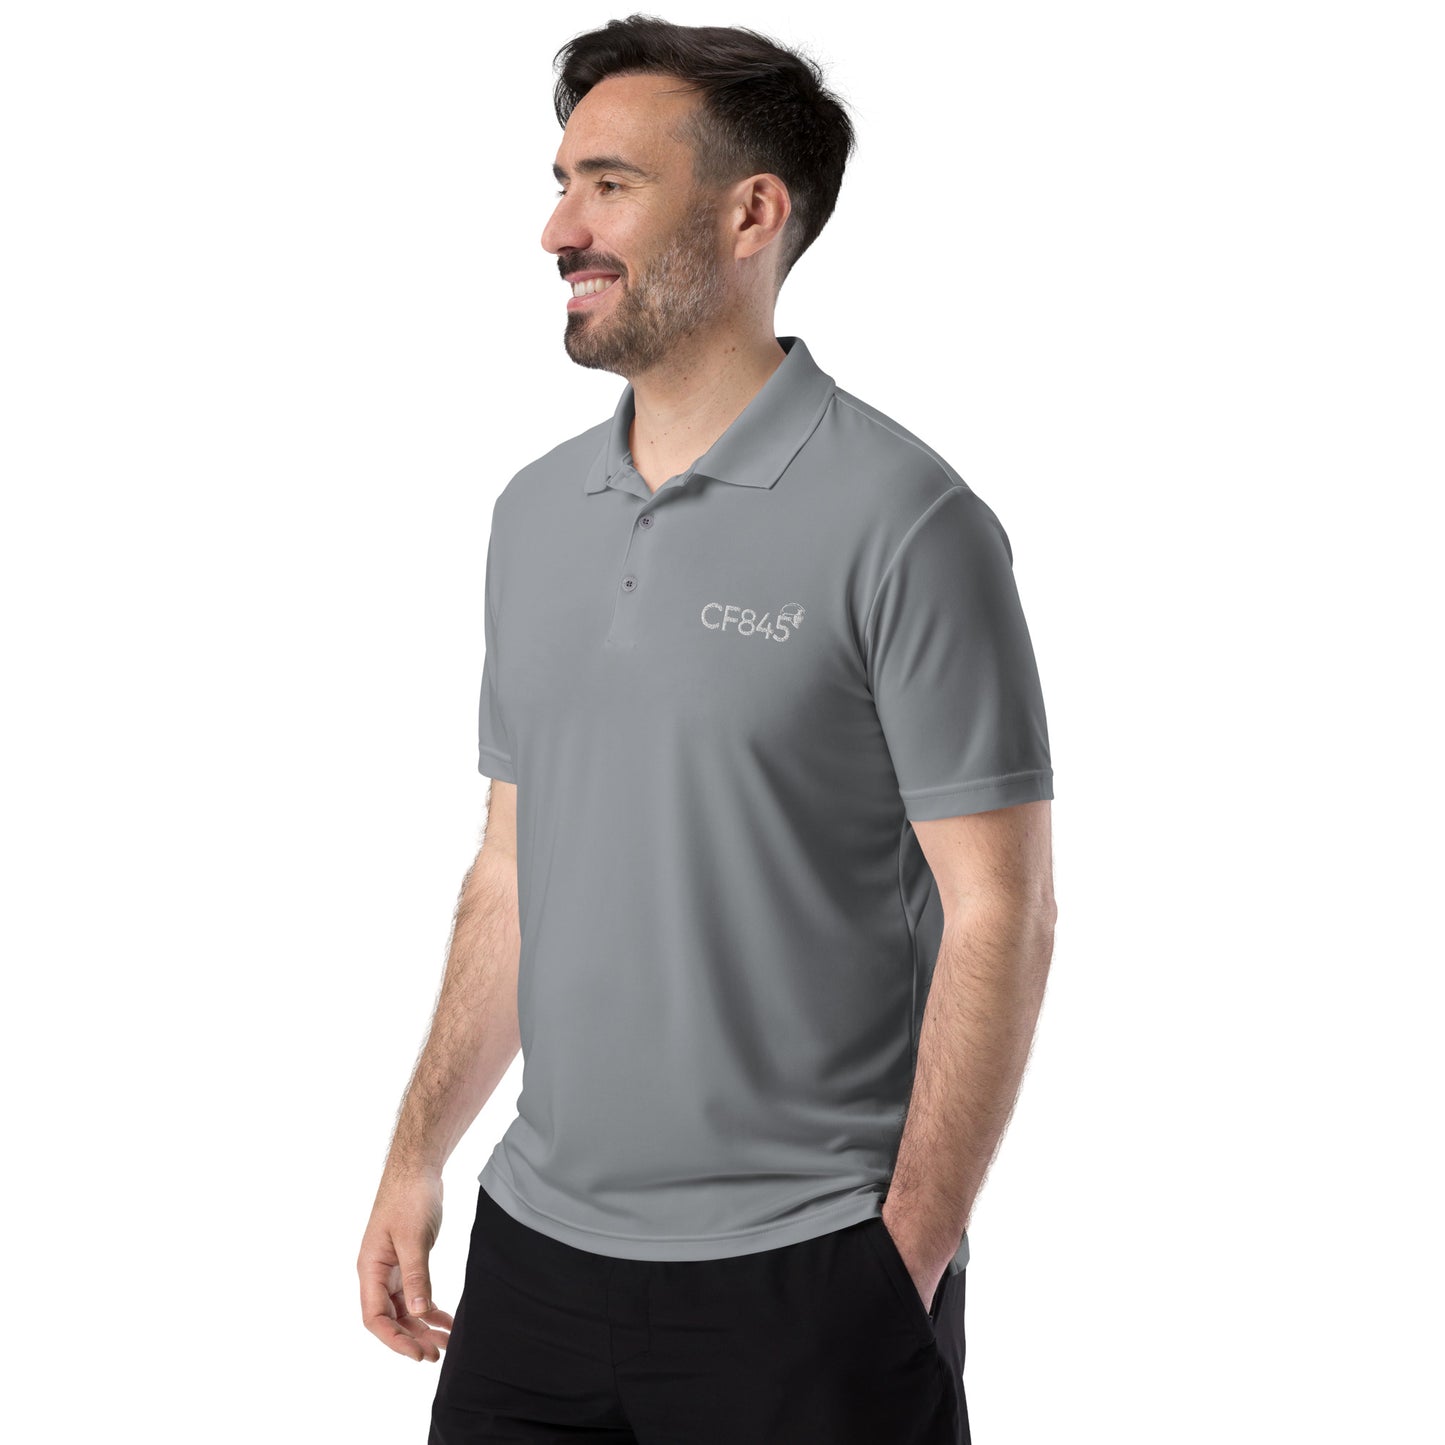 Adidas Performance Golf Shirt